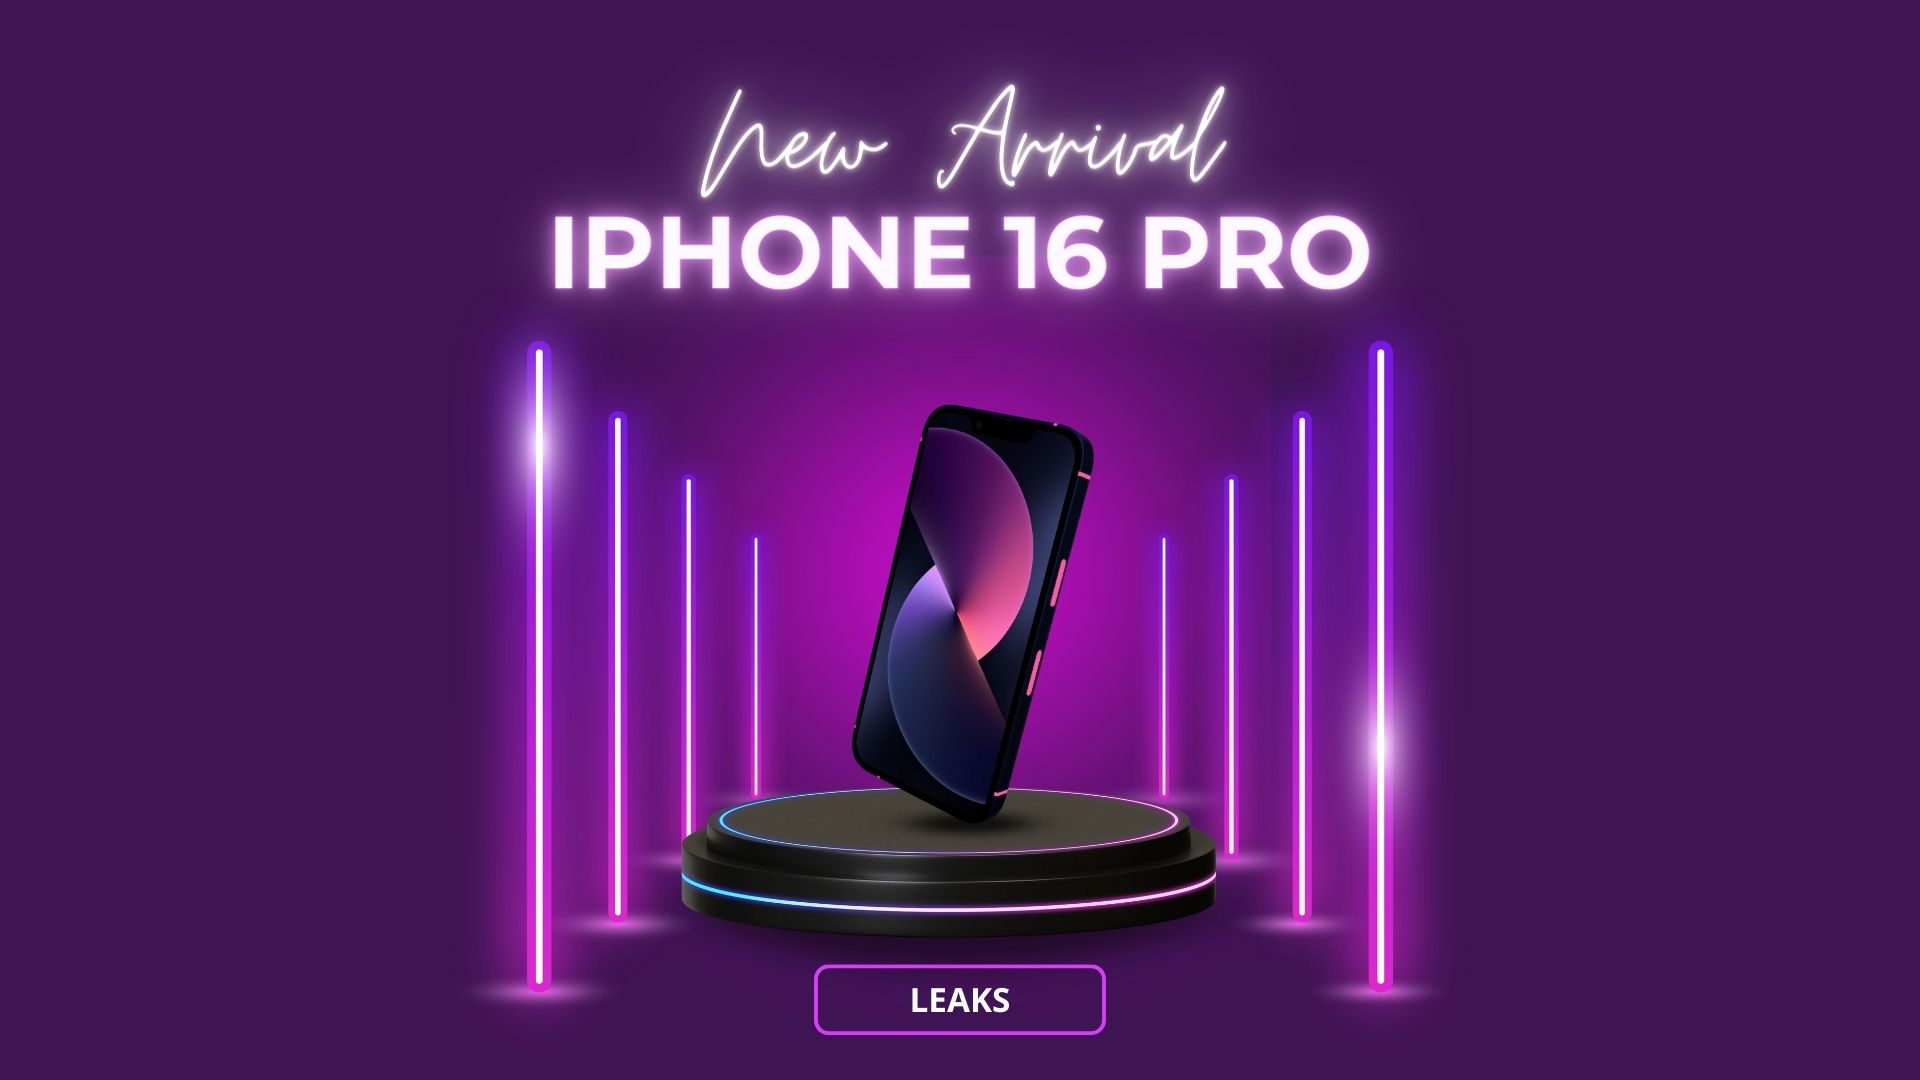 iphone 16 pro leaks design